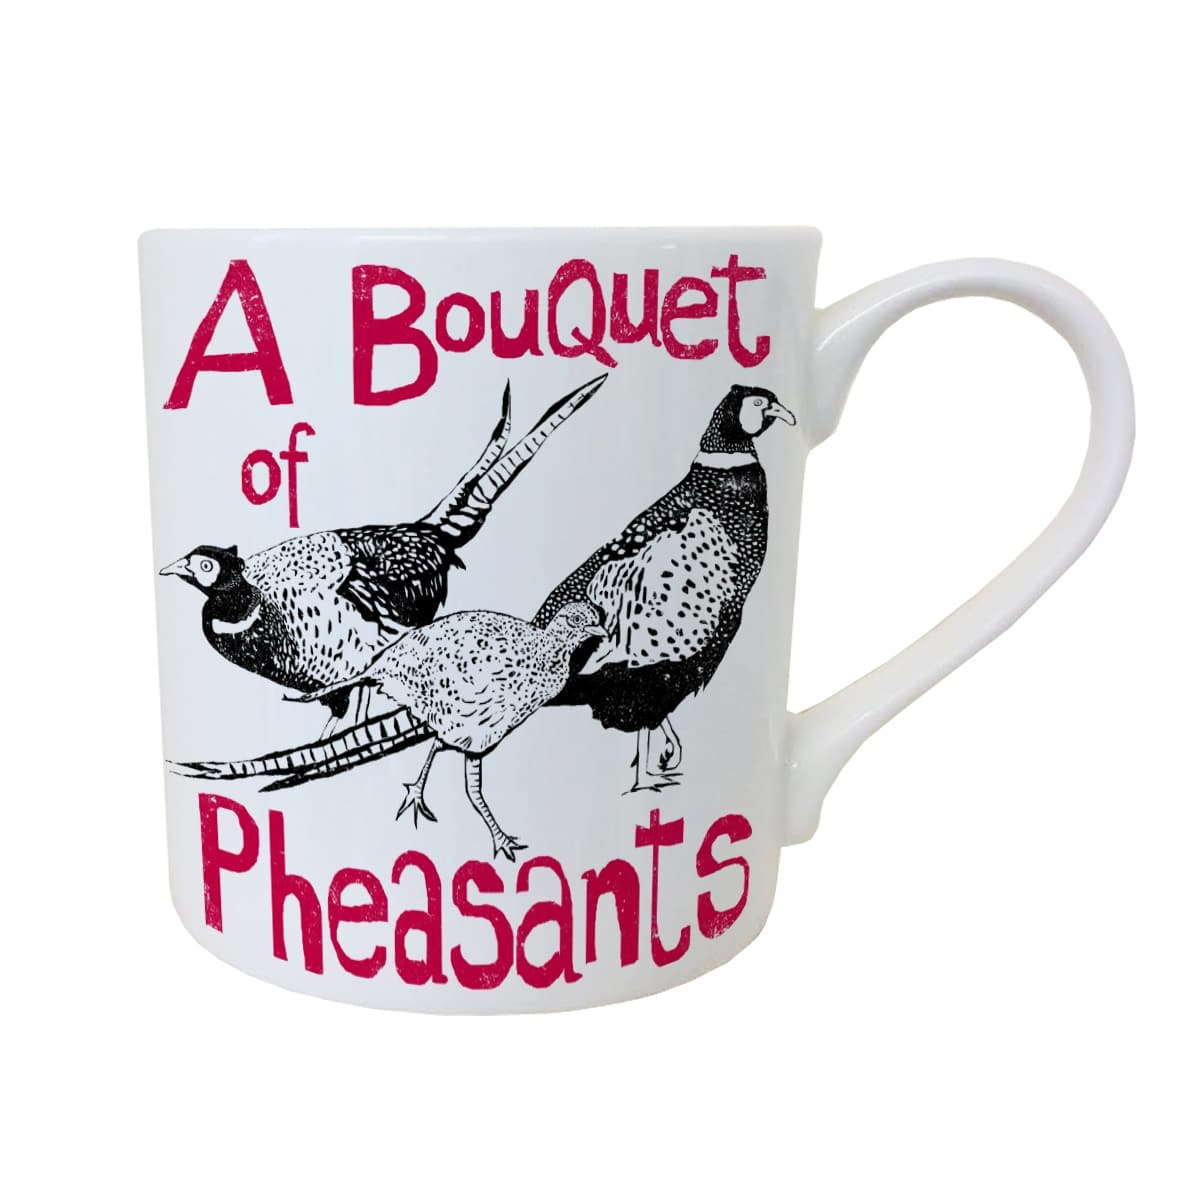 Bouquet of Pheasants mug